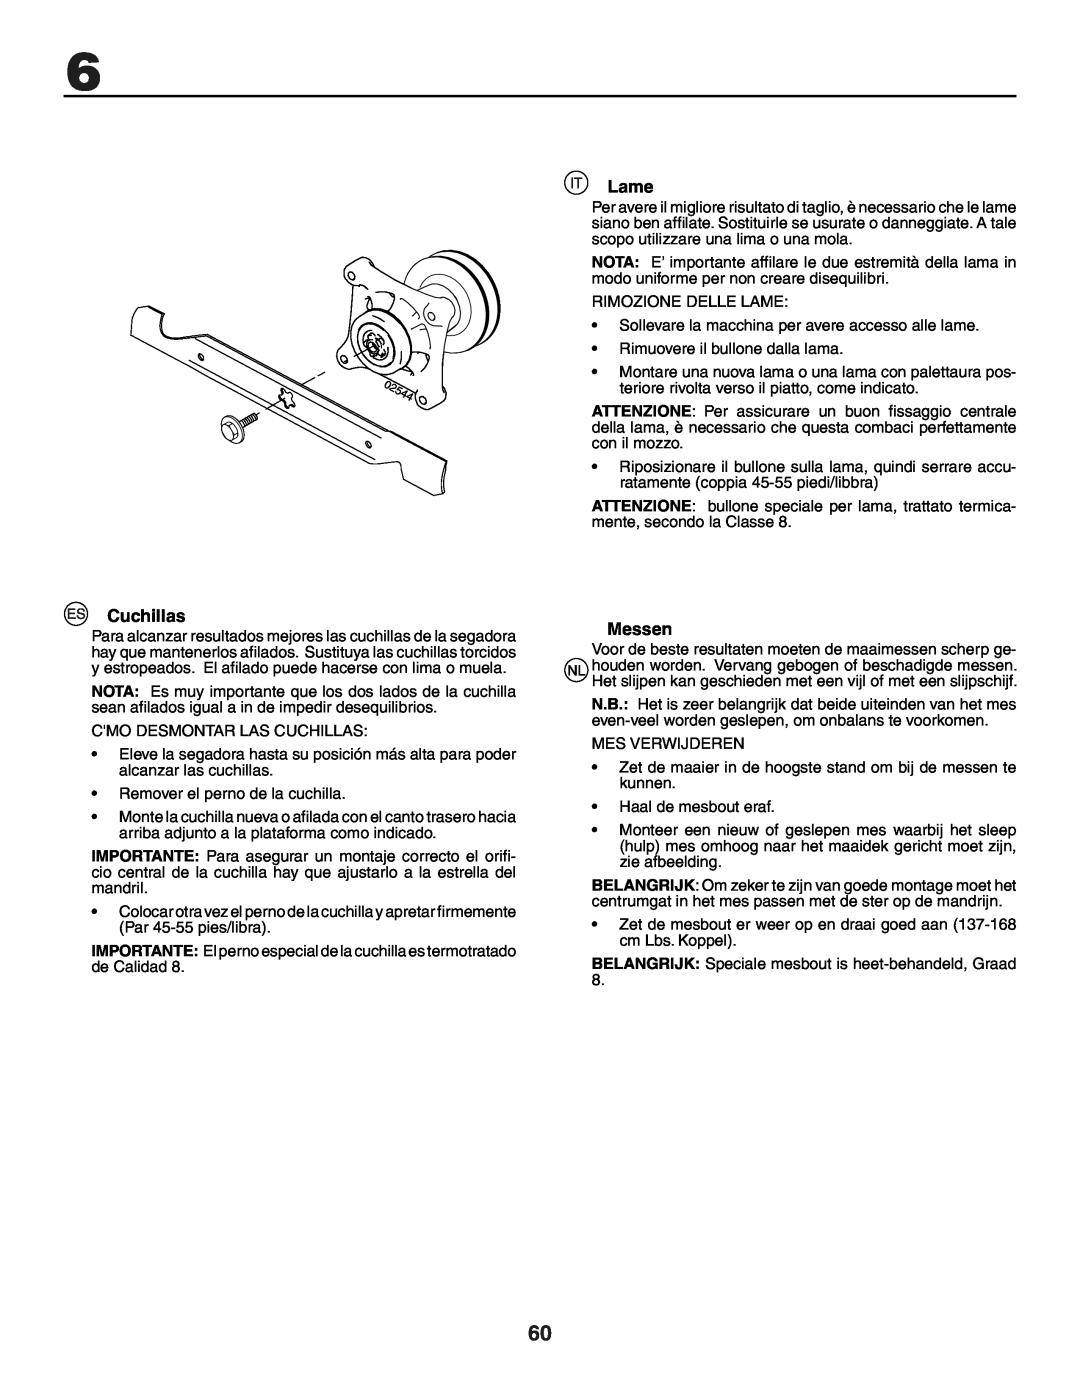 Husqvarna GTH250XP instruction manual Cuchillas, Lame, Messen 